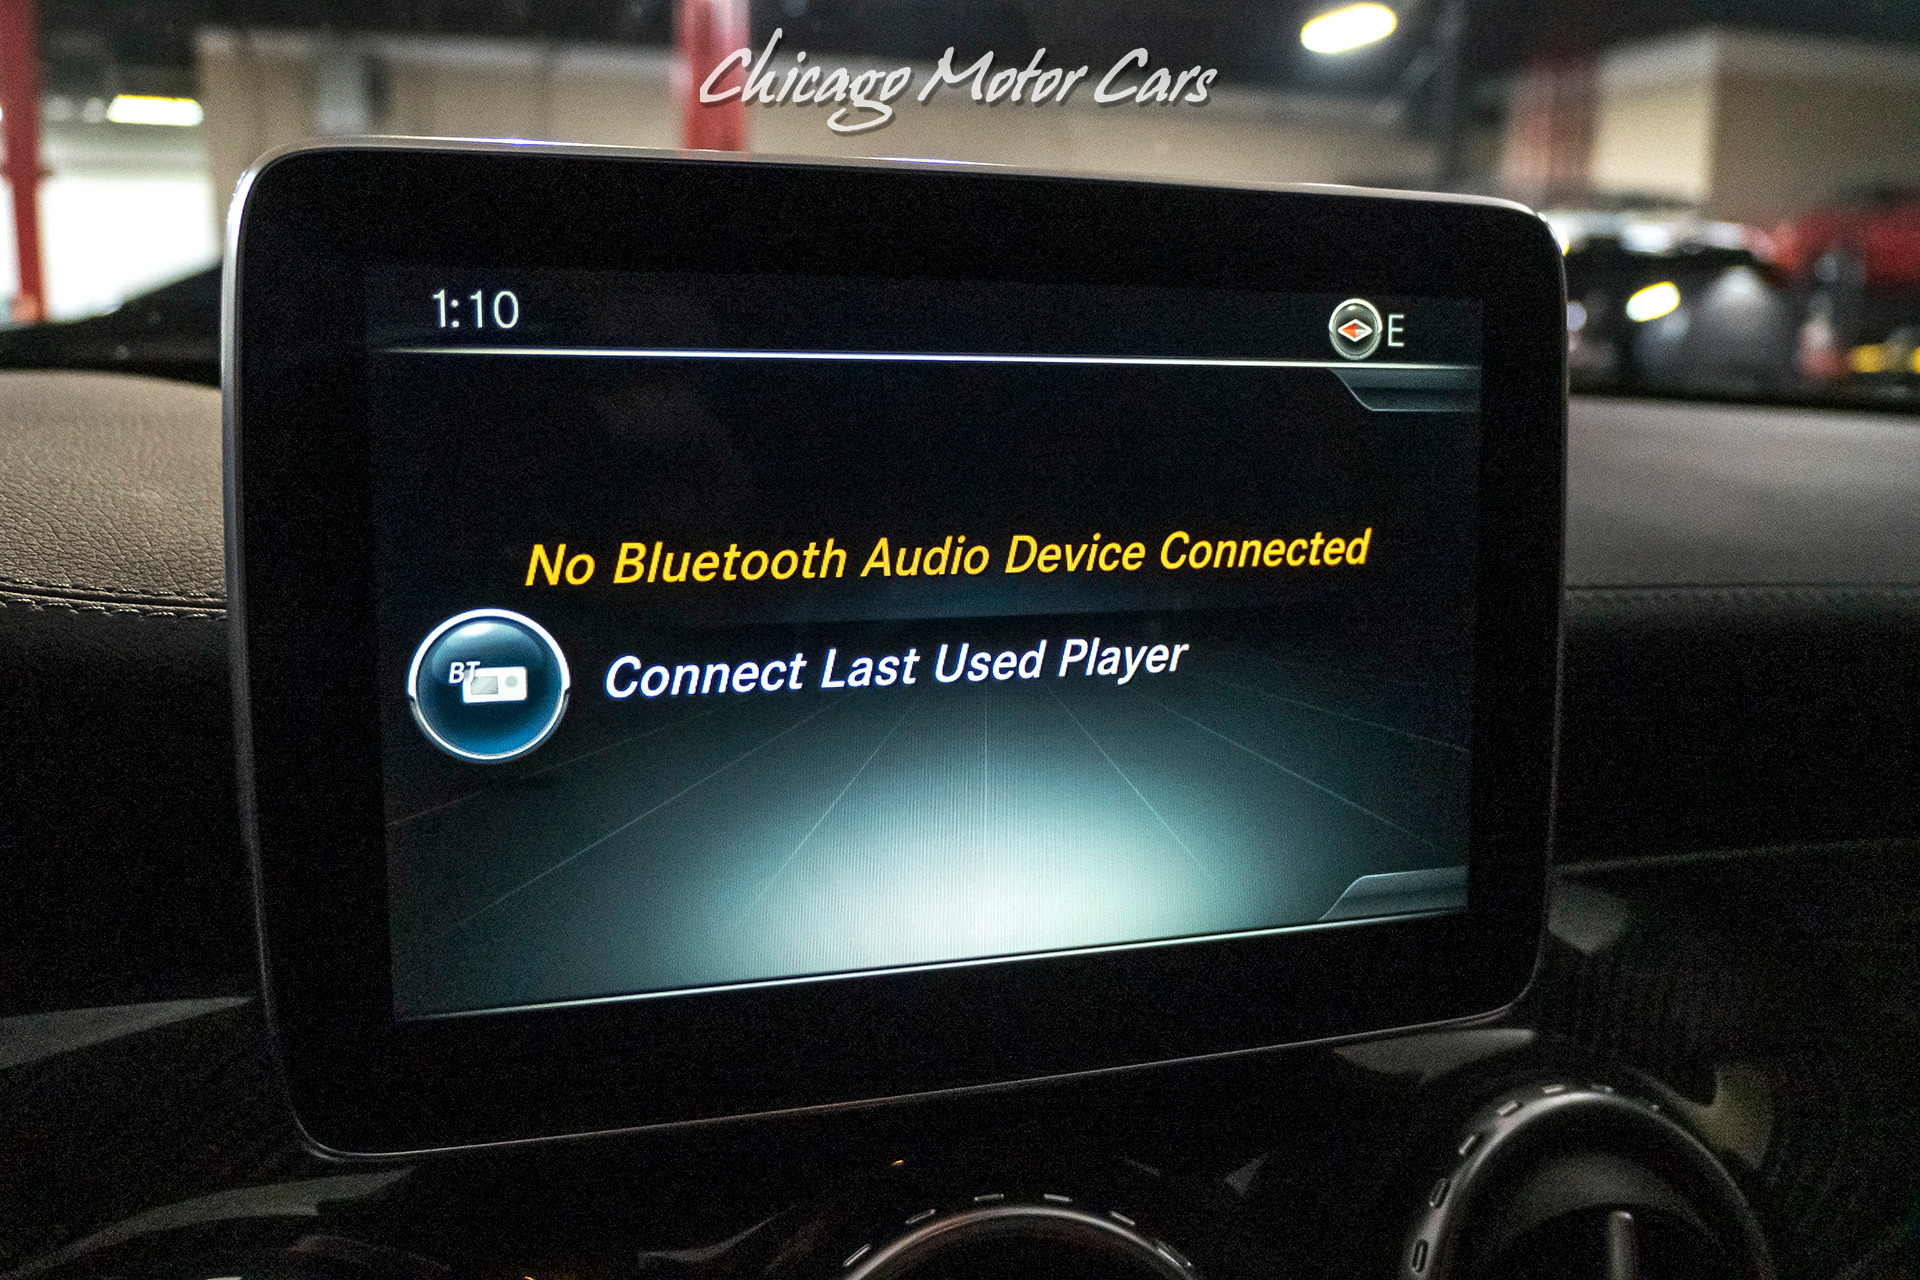 Moto multifonction radio commandee 1:10, vehicules-garages